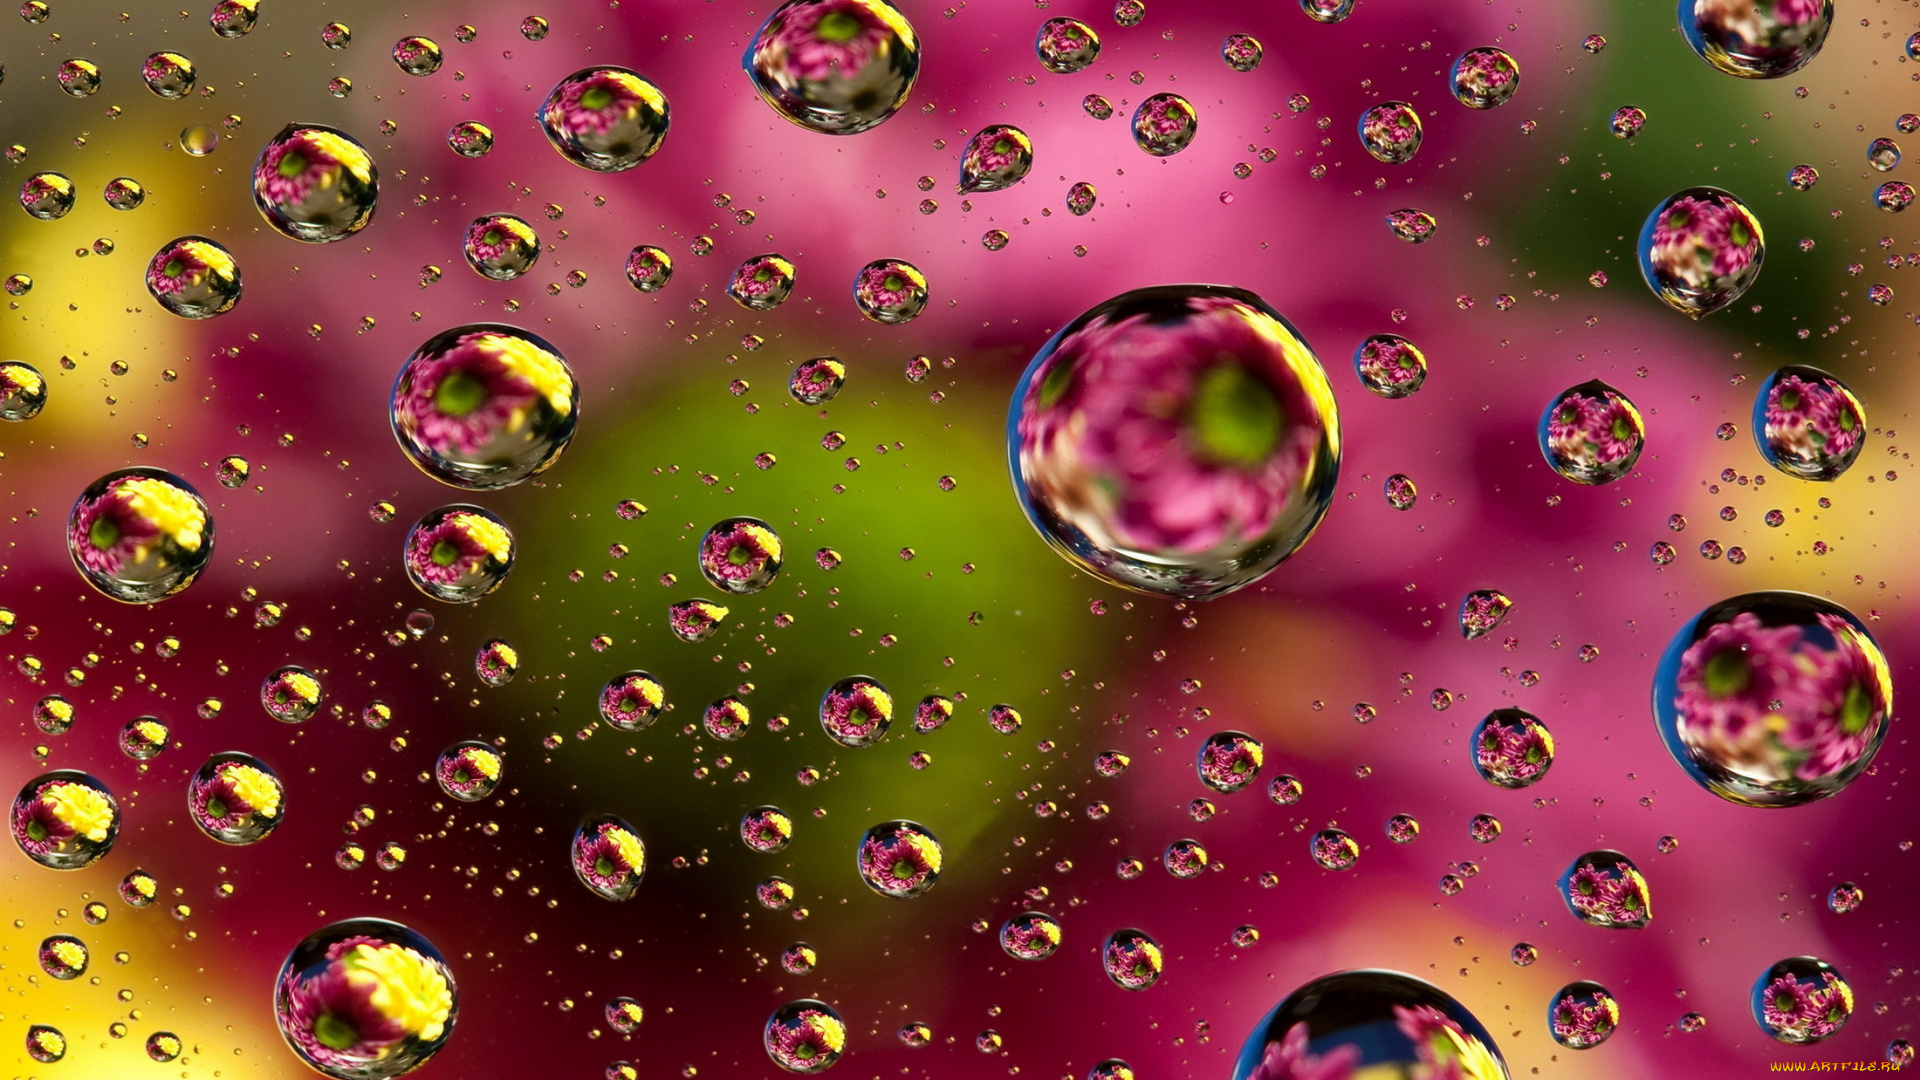 разное, капли, , брызги, , всплески, floral, colorful, пузыри, bubbles, background, colors, abstract, абстракция, фон